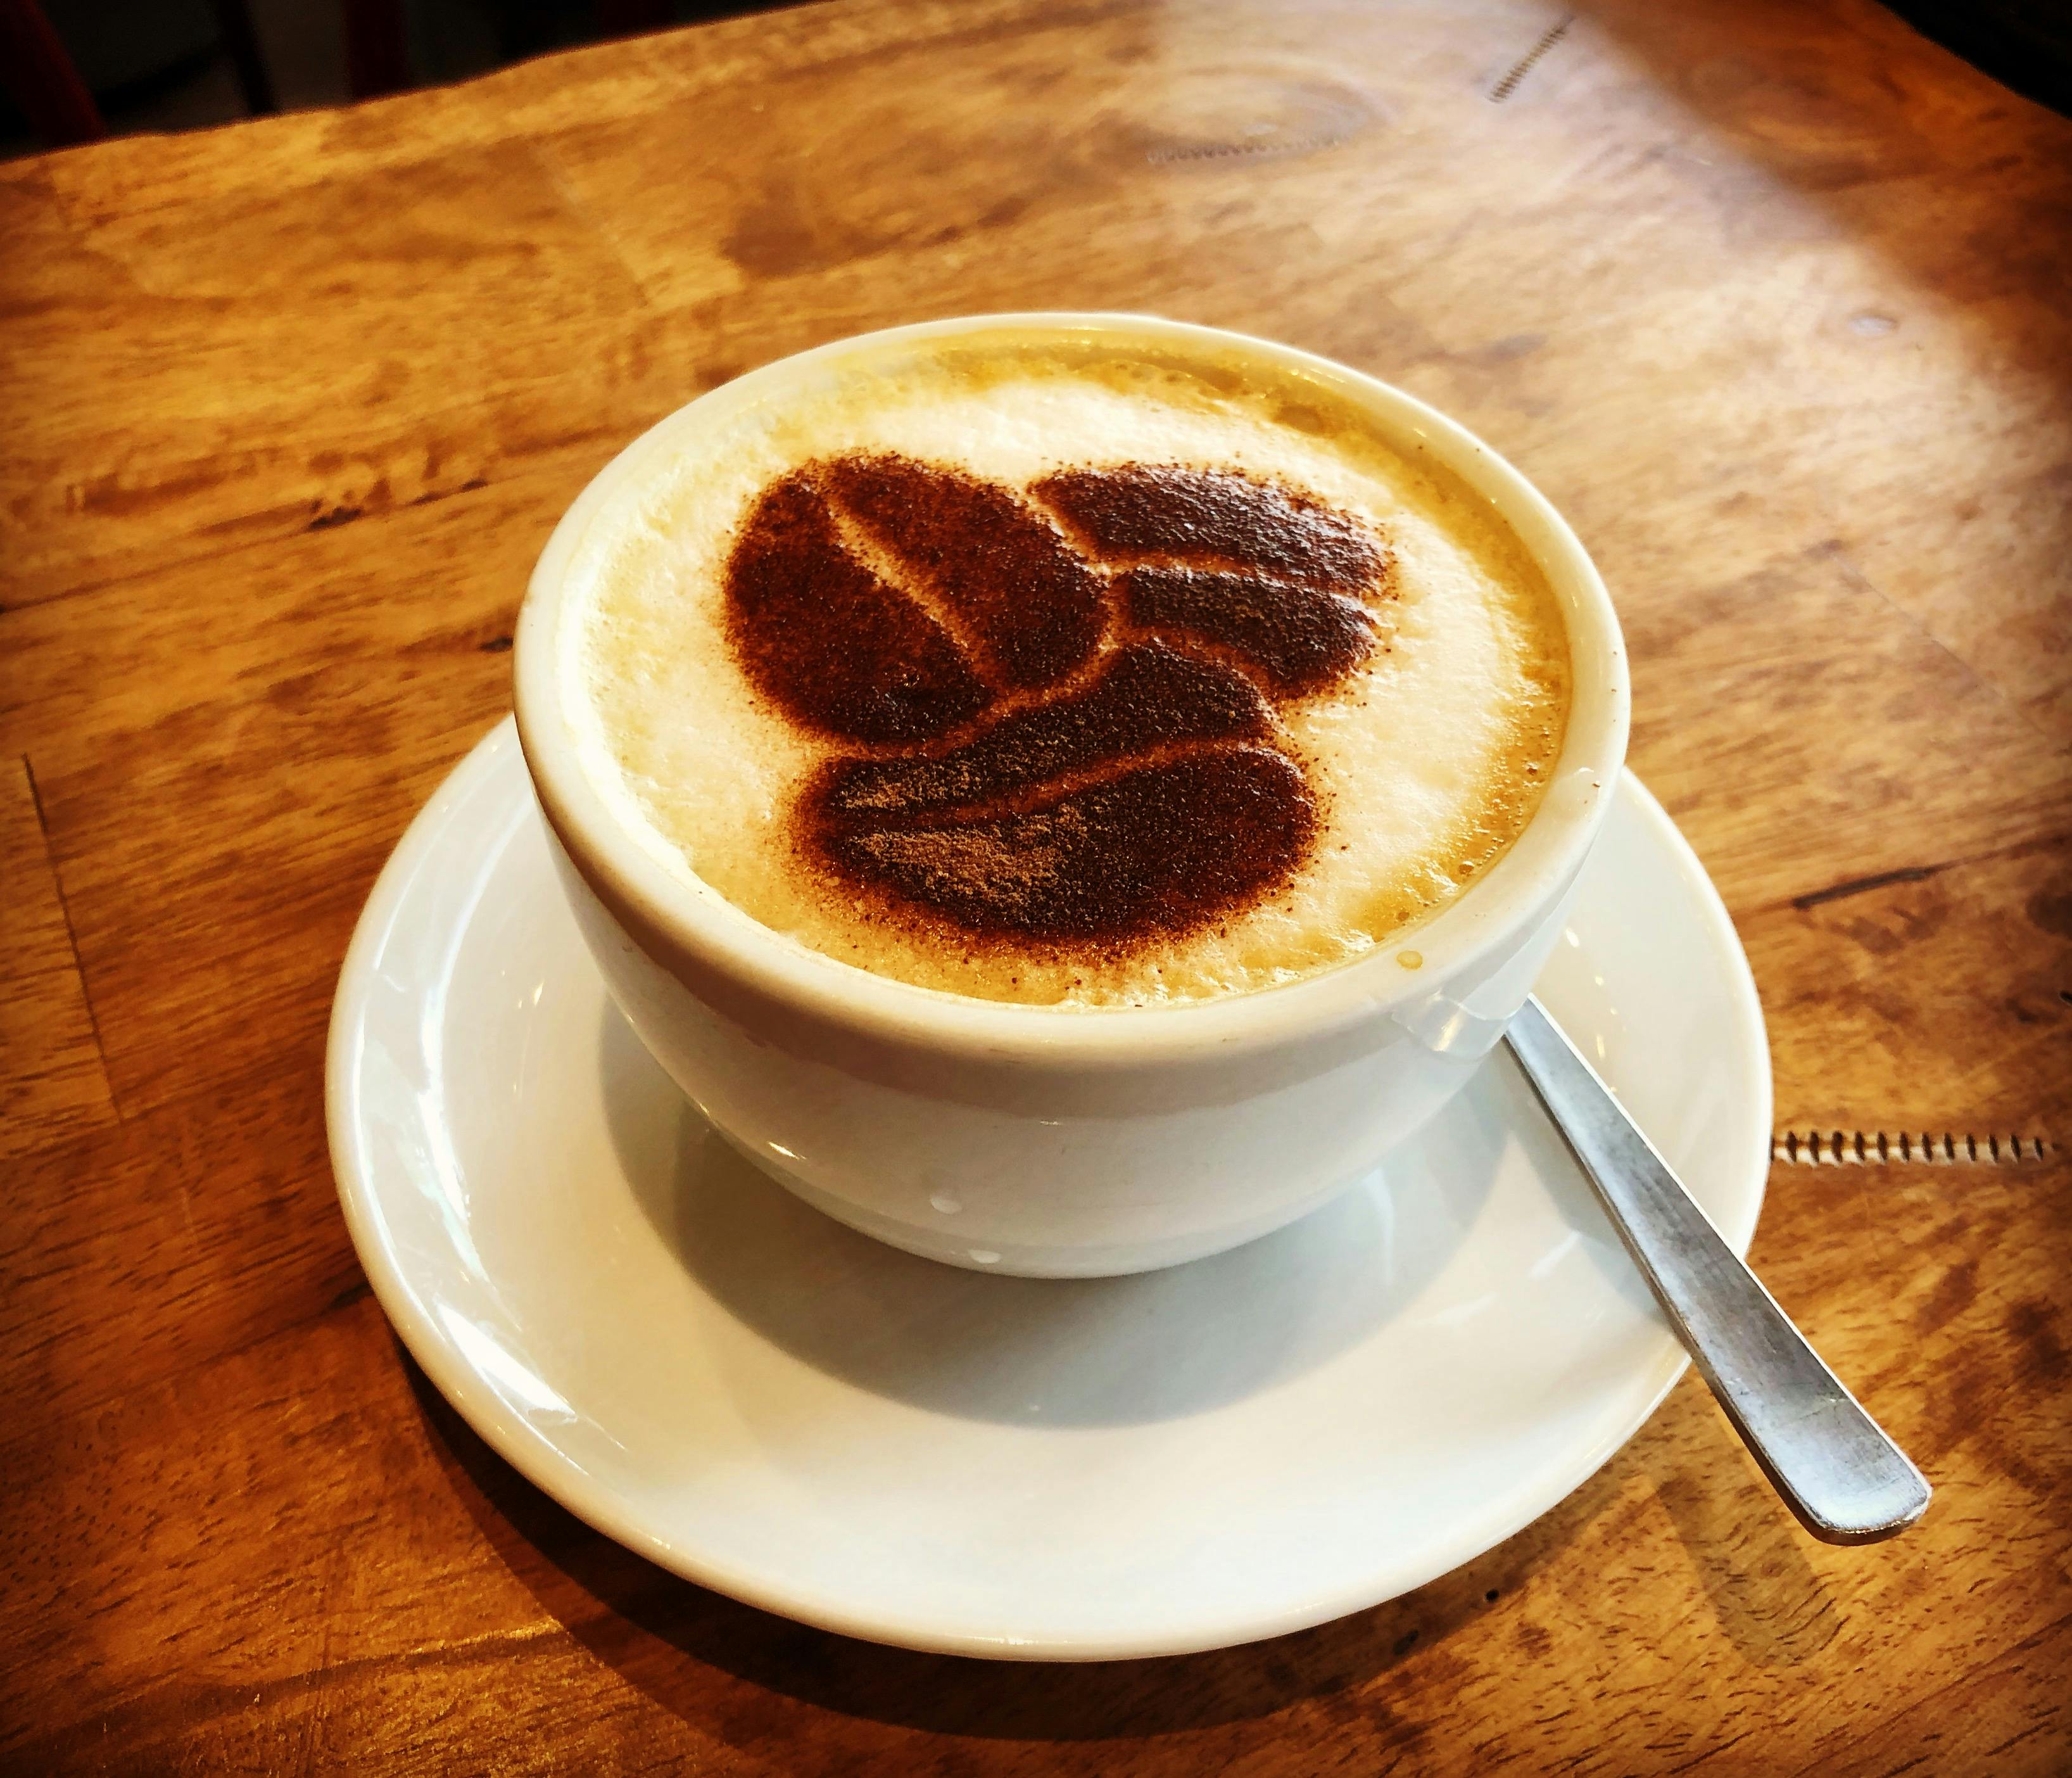 File:Cappuccino at Sightglass Coffee.jpg - Wikimedia Commons